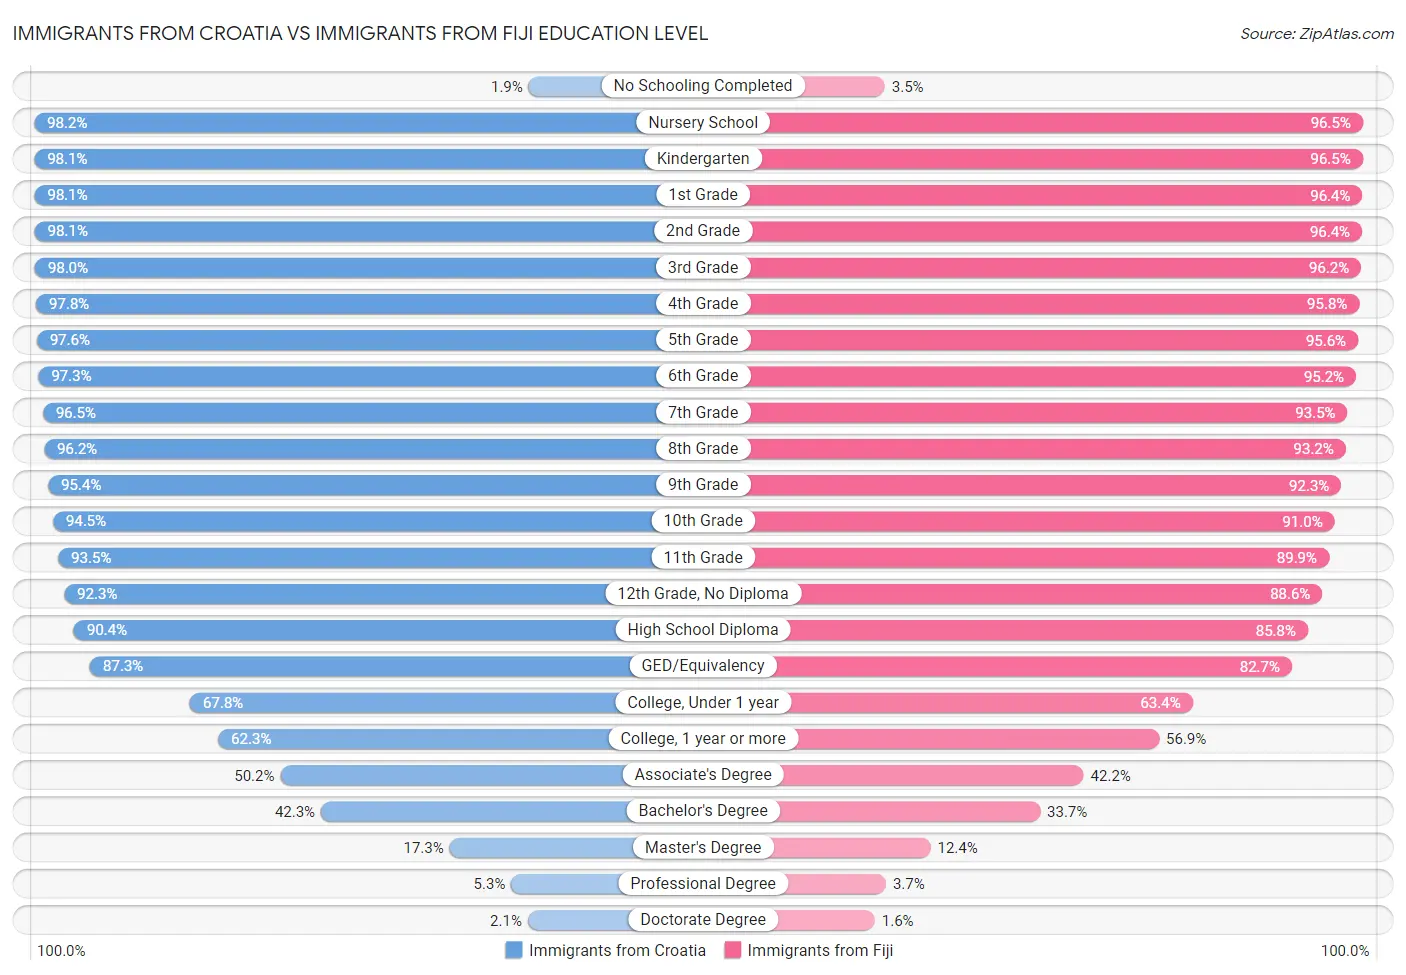 Immigrants from Croatia vs Immigrants from Fiji Education Level